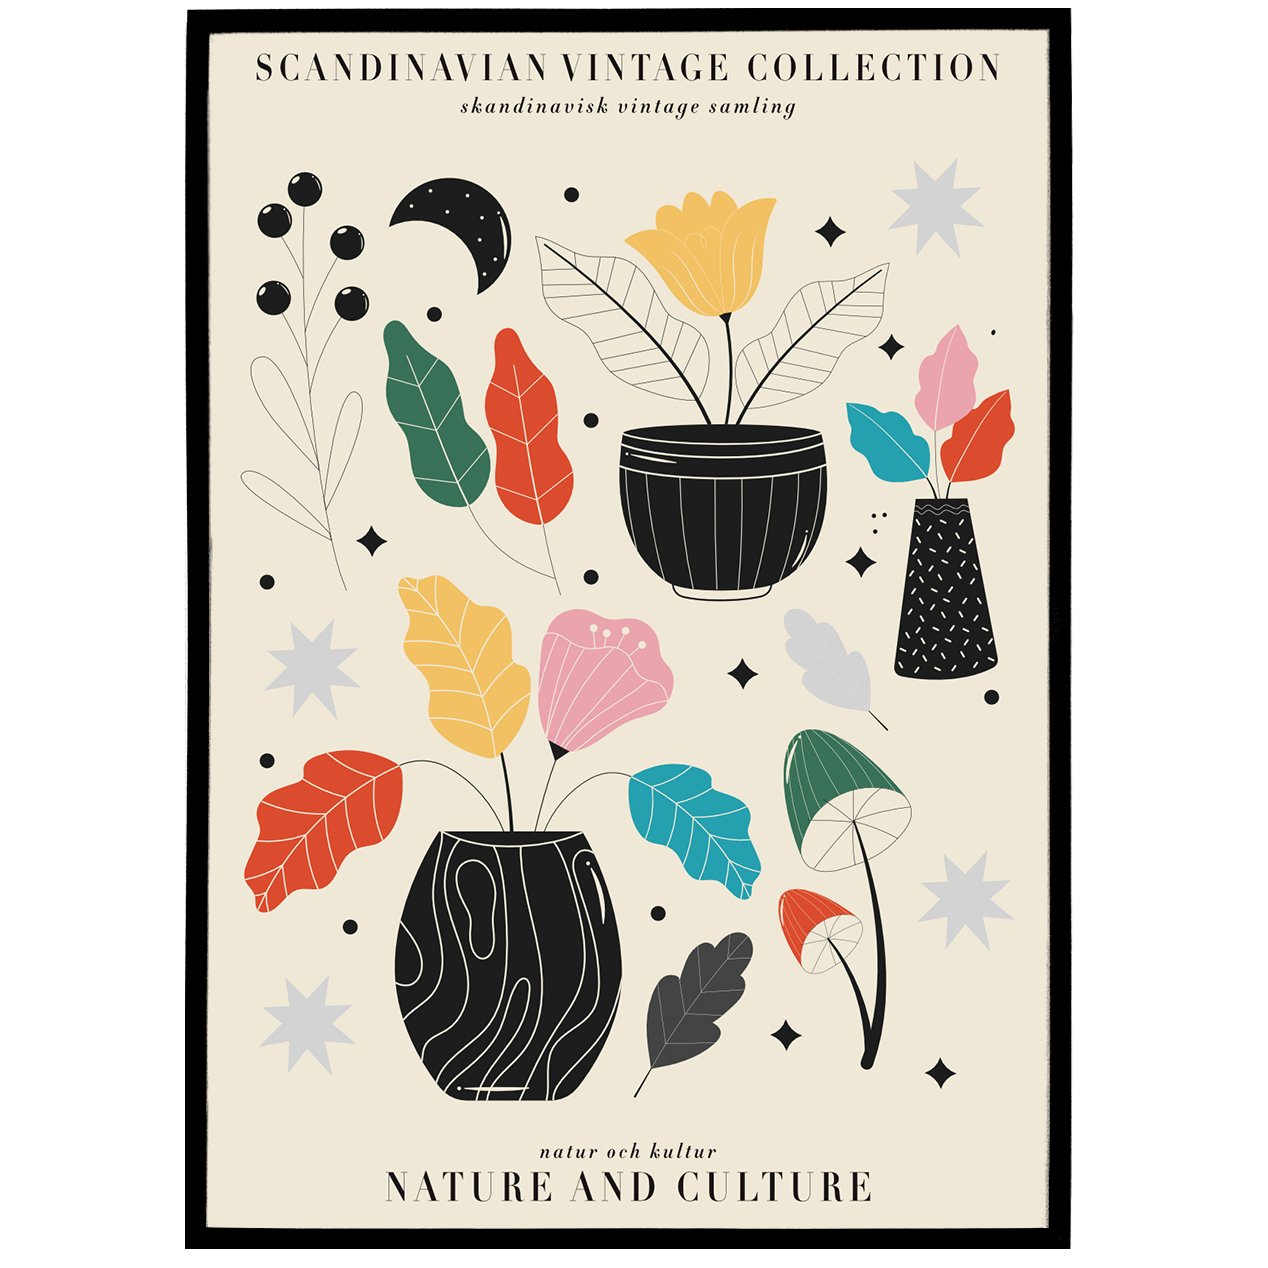 Exhibition Poster - Scandinavian Vintage Collection